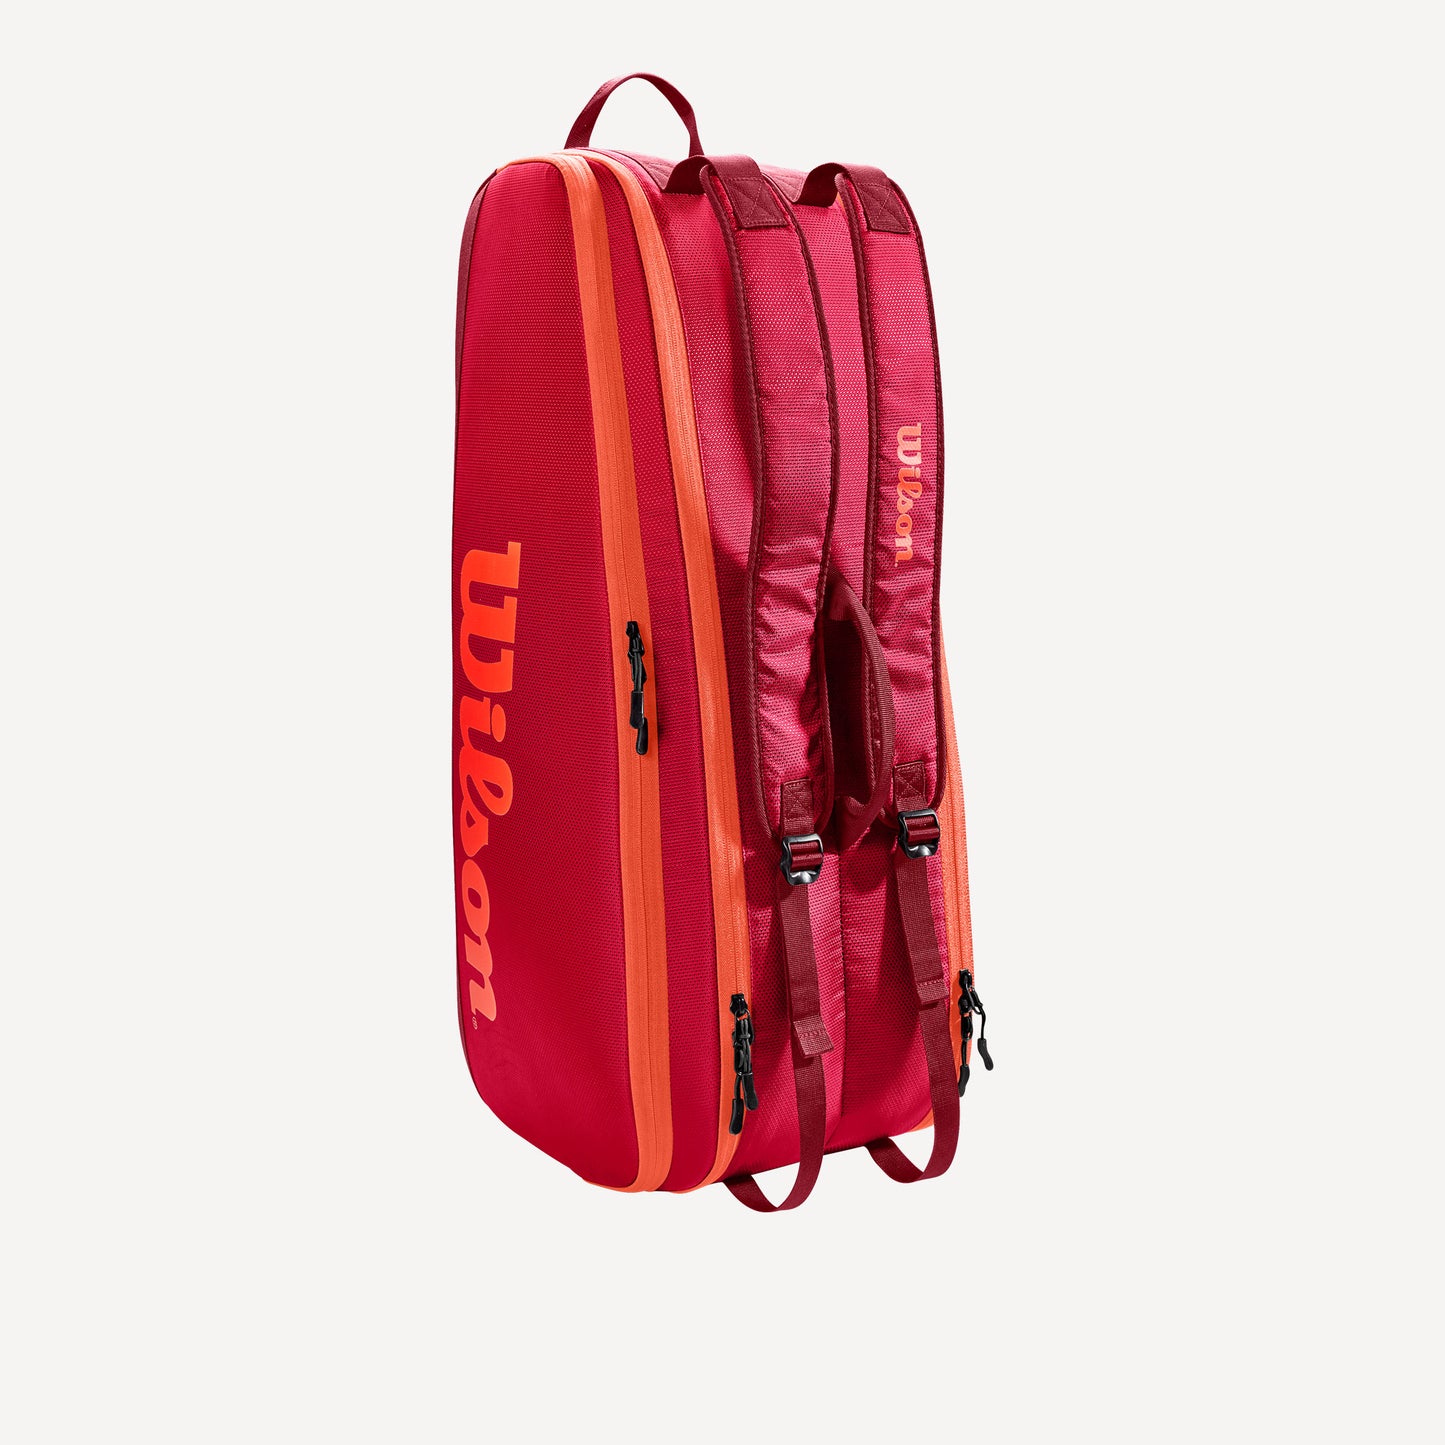 Wilson Tour 6 Pack Tennis Bag Red (3)